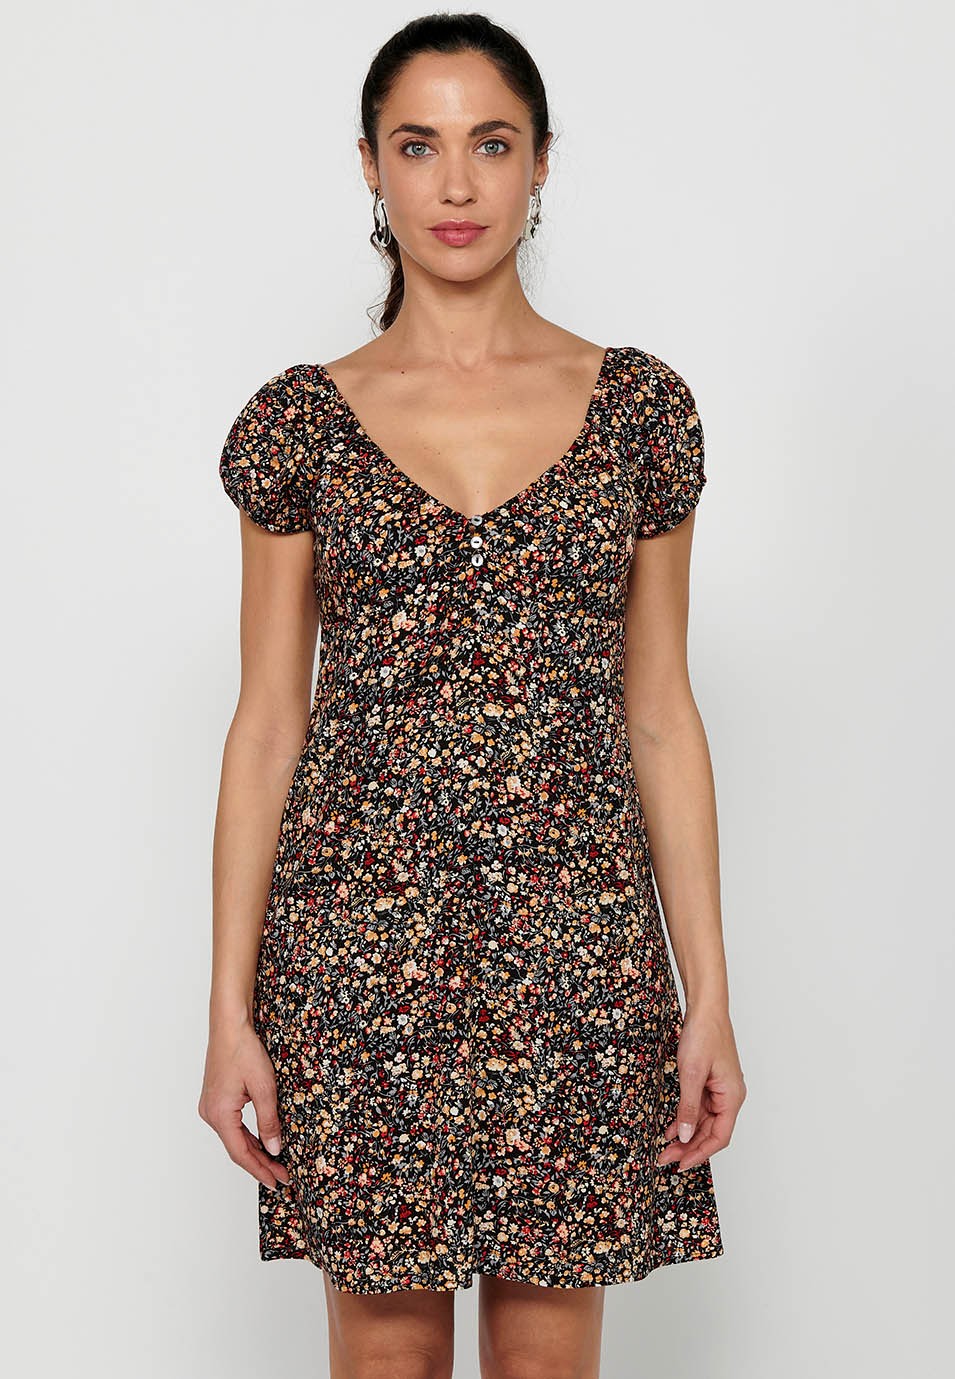 Damen-Kleid mit mehrfarbigem Blumendruck, kurzen Ärmeln, gerafftem Ausschnitt und Reißverschluss hinten 8